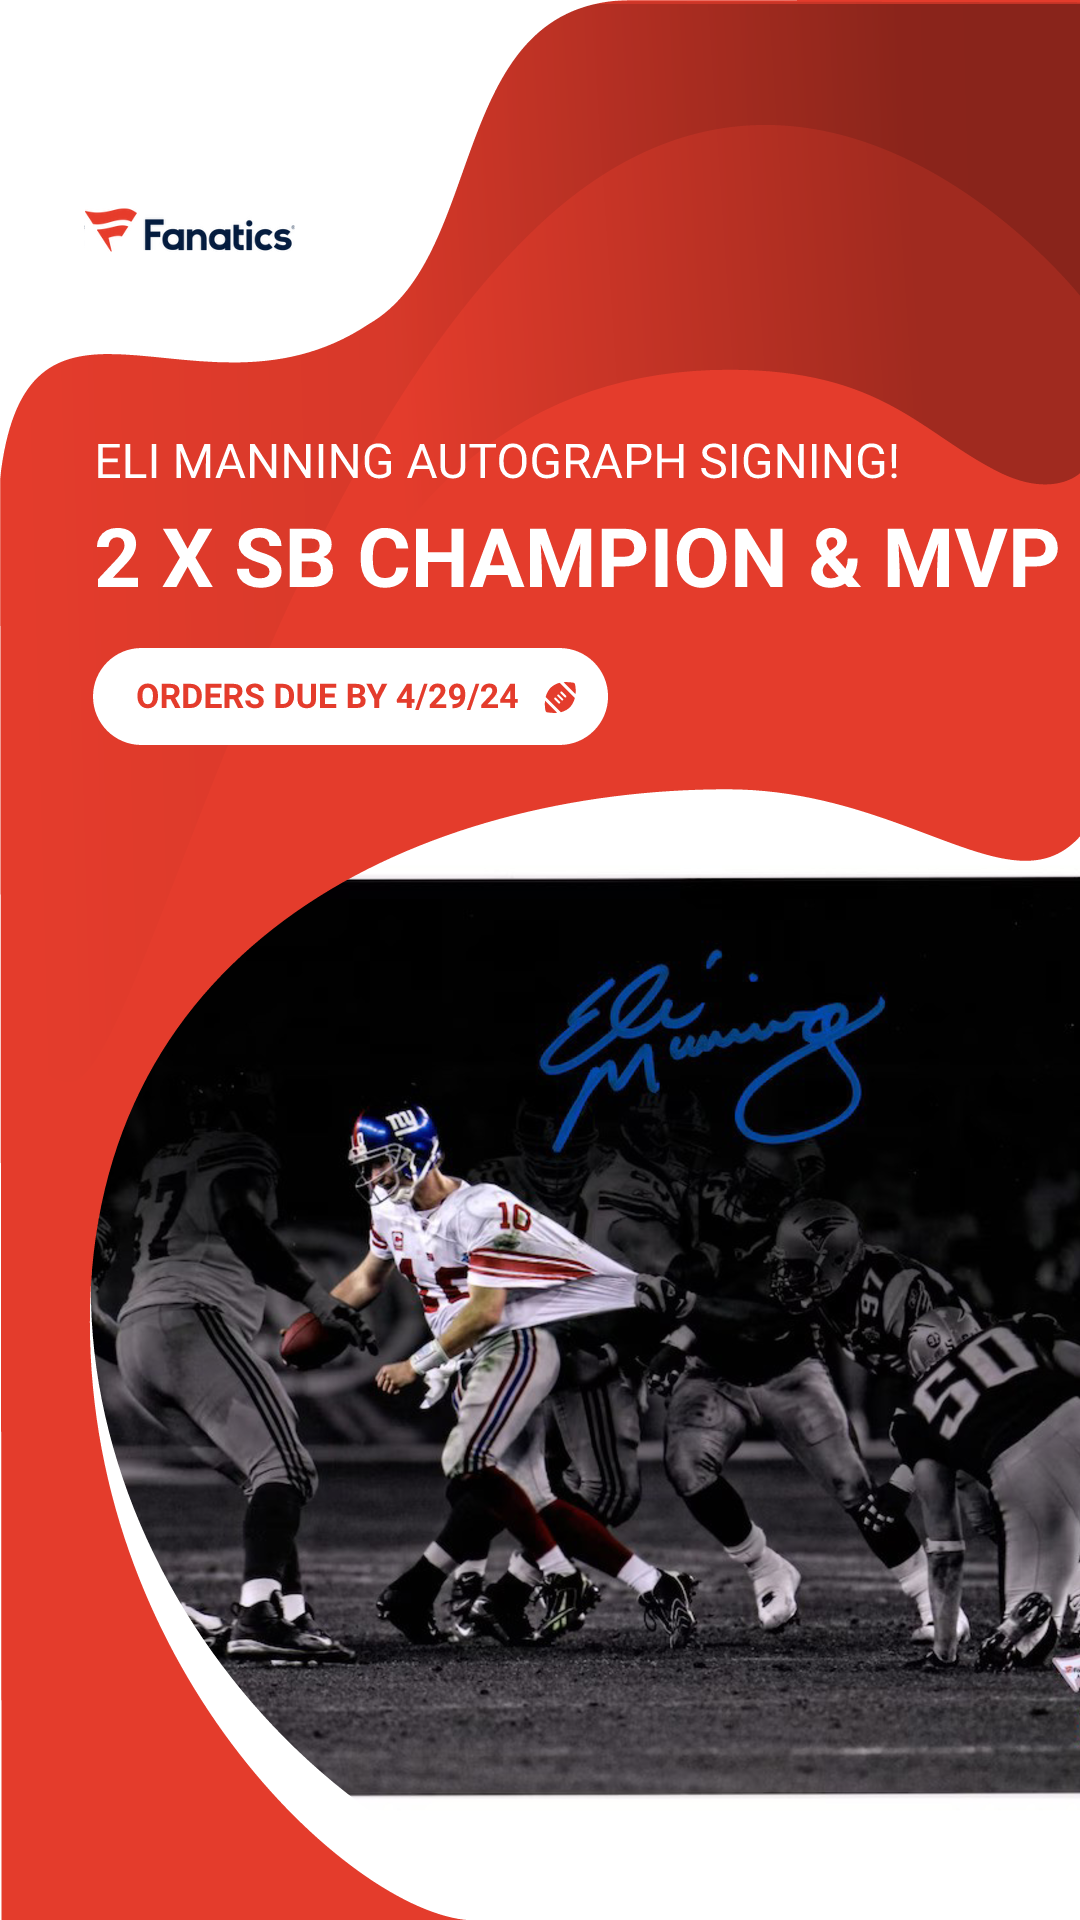 Eli Manning Autograph Signing-Powers Sports Memorabilia